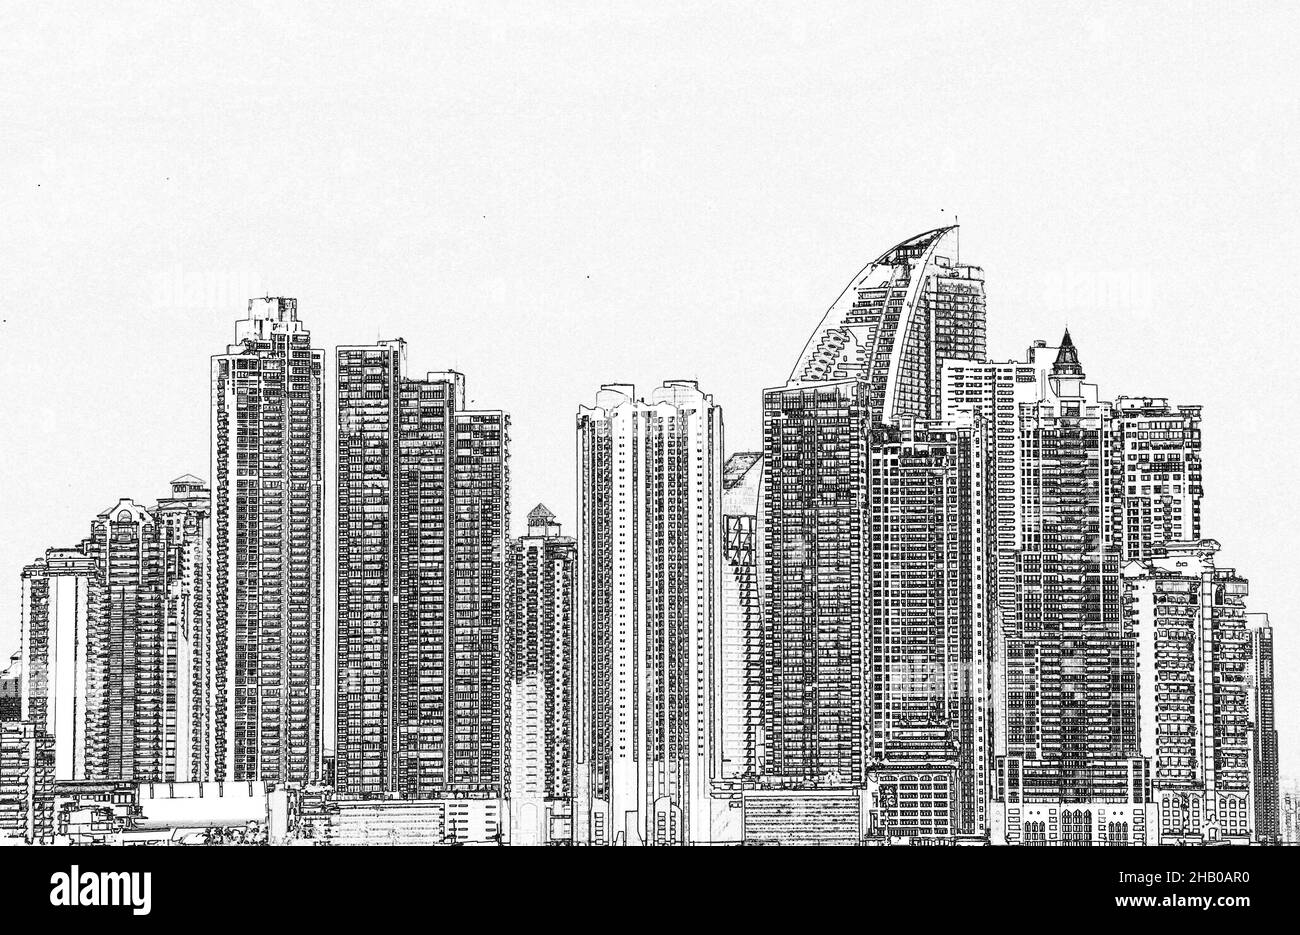 Panama city skyline Black and White Stock Photos & Images - Alamy